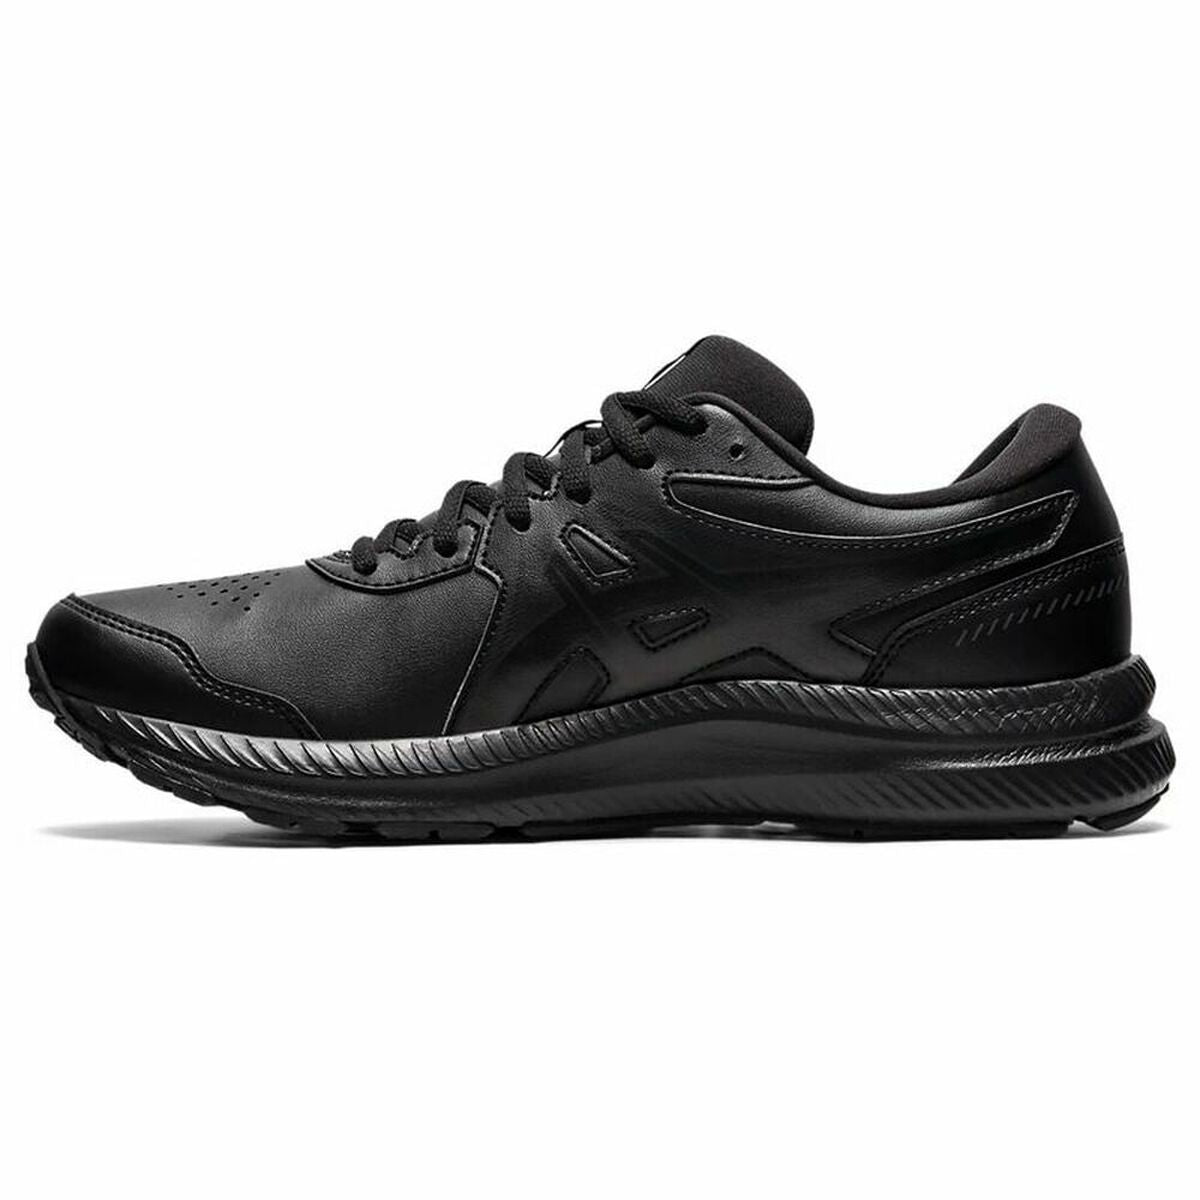 Chaussures de Running pour Adultes Asics GEL-Contend SL M Noir (40.5) - Asics - Jardin D'Eyden - jardindeyden.fr